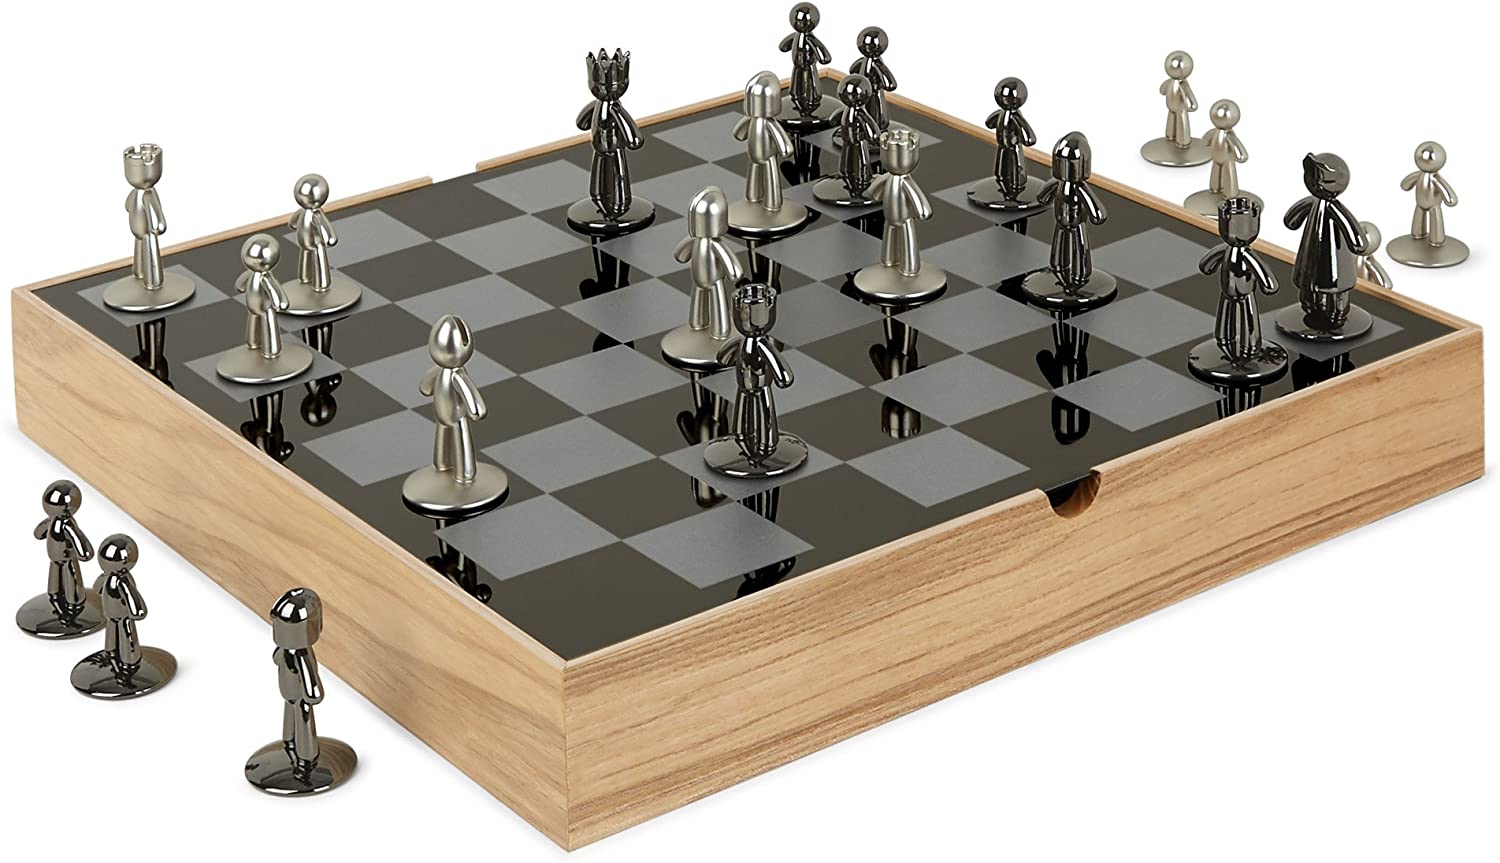 Relógio de xadrez de madeira - estilo Gambito da Rainha Netflix